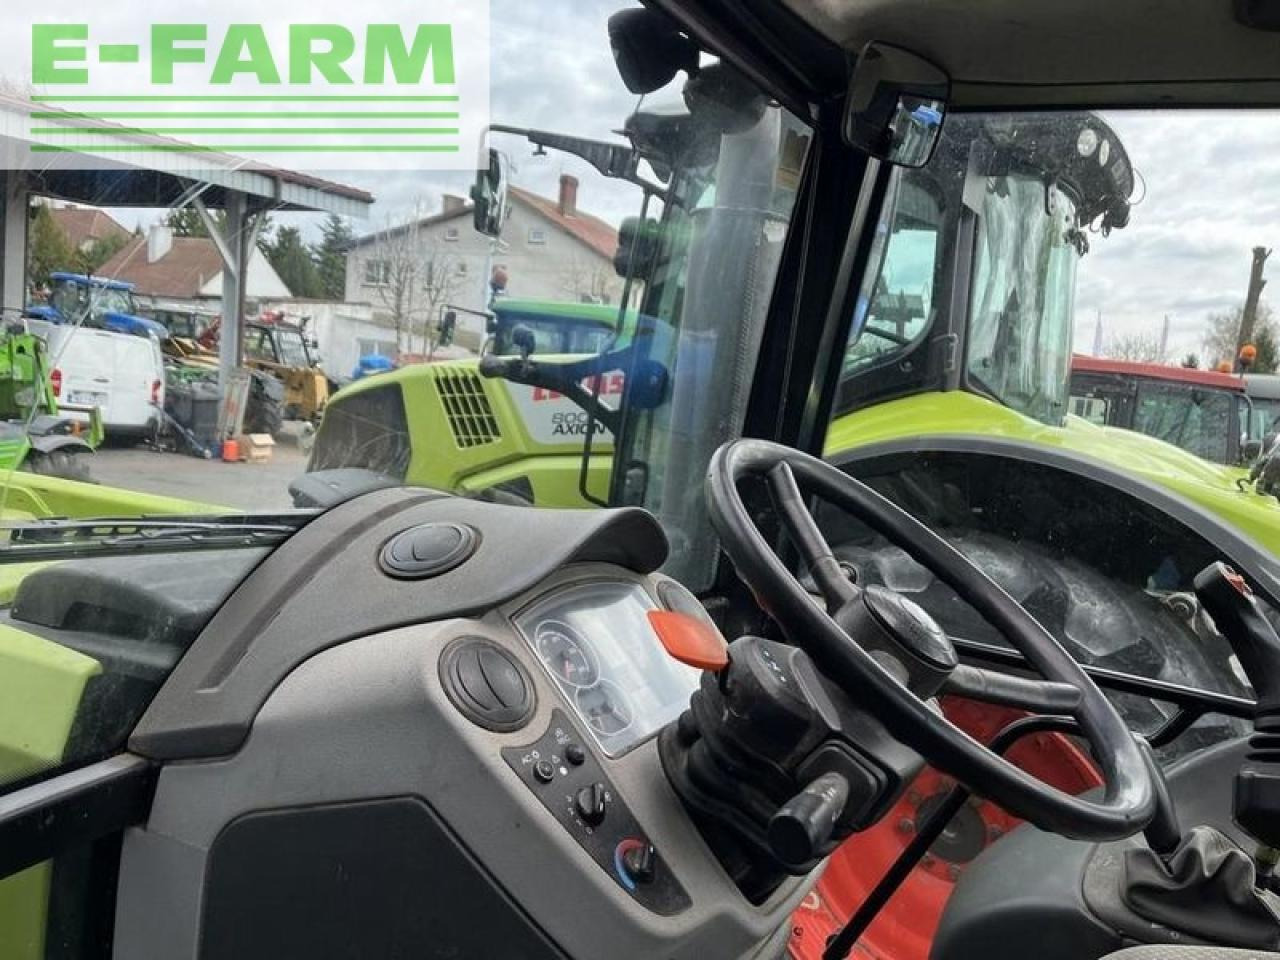 Farm tractor CLAAS arion 420 cis + claas fl100